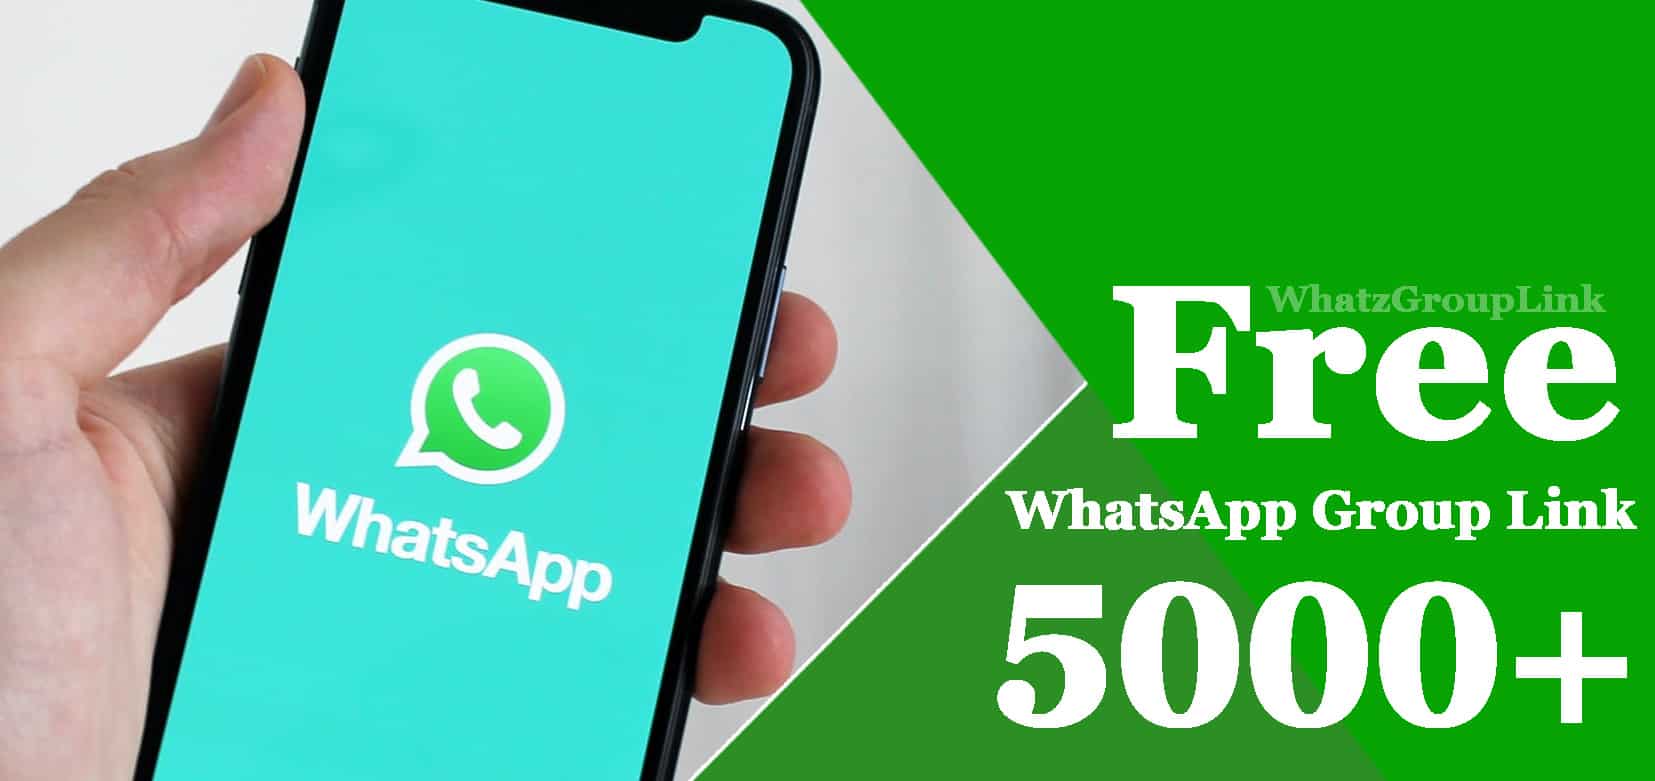 Free WhatsApp Group Link 5000